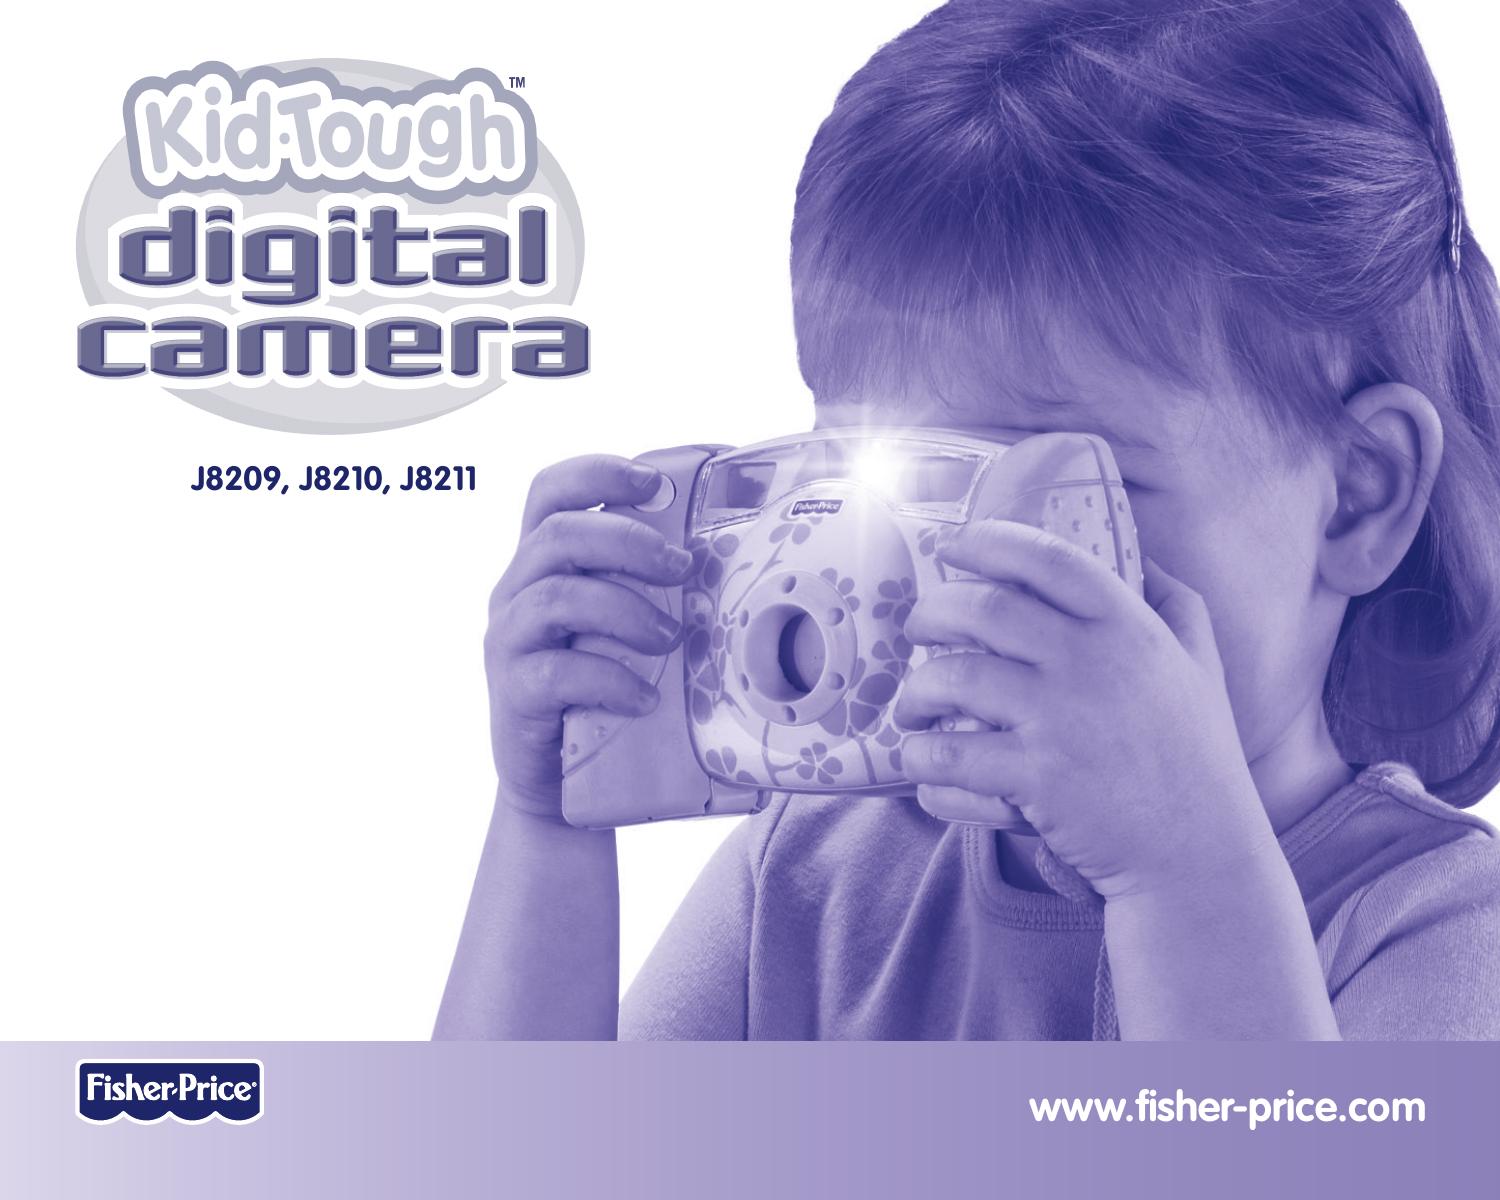 Fisher-Price J8211 Digital Camera User Manual